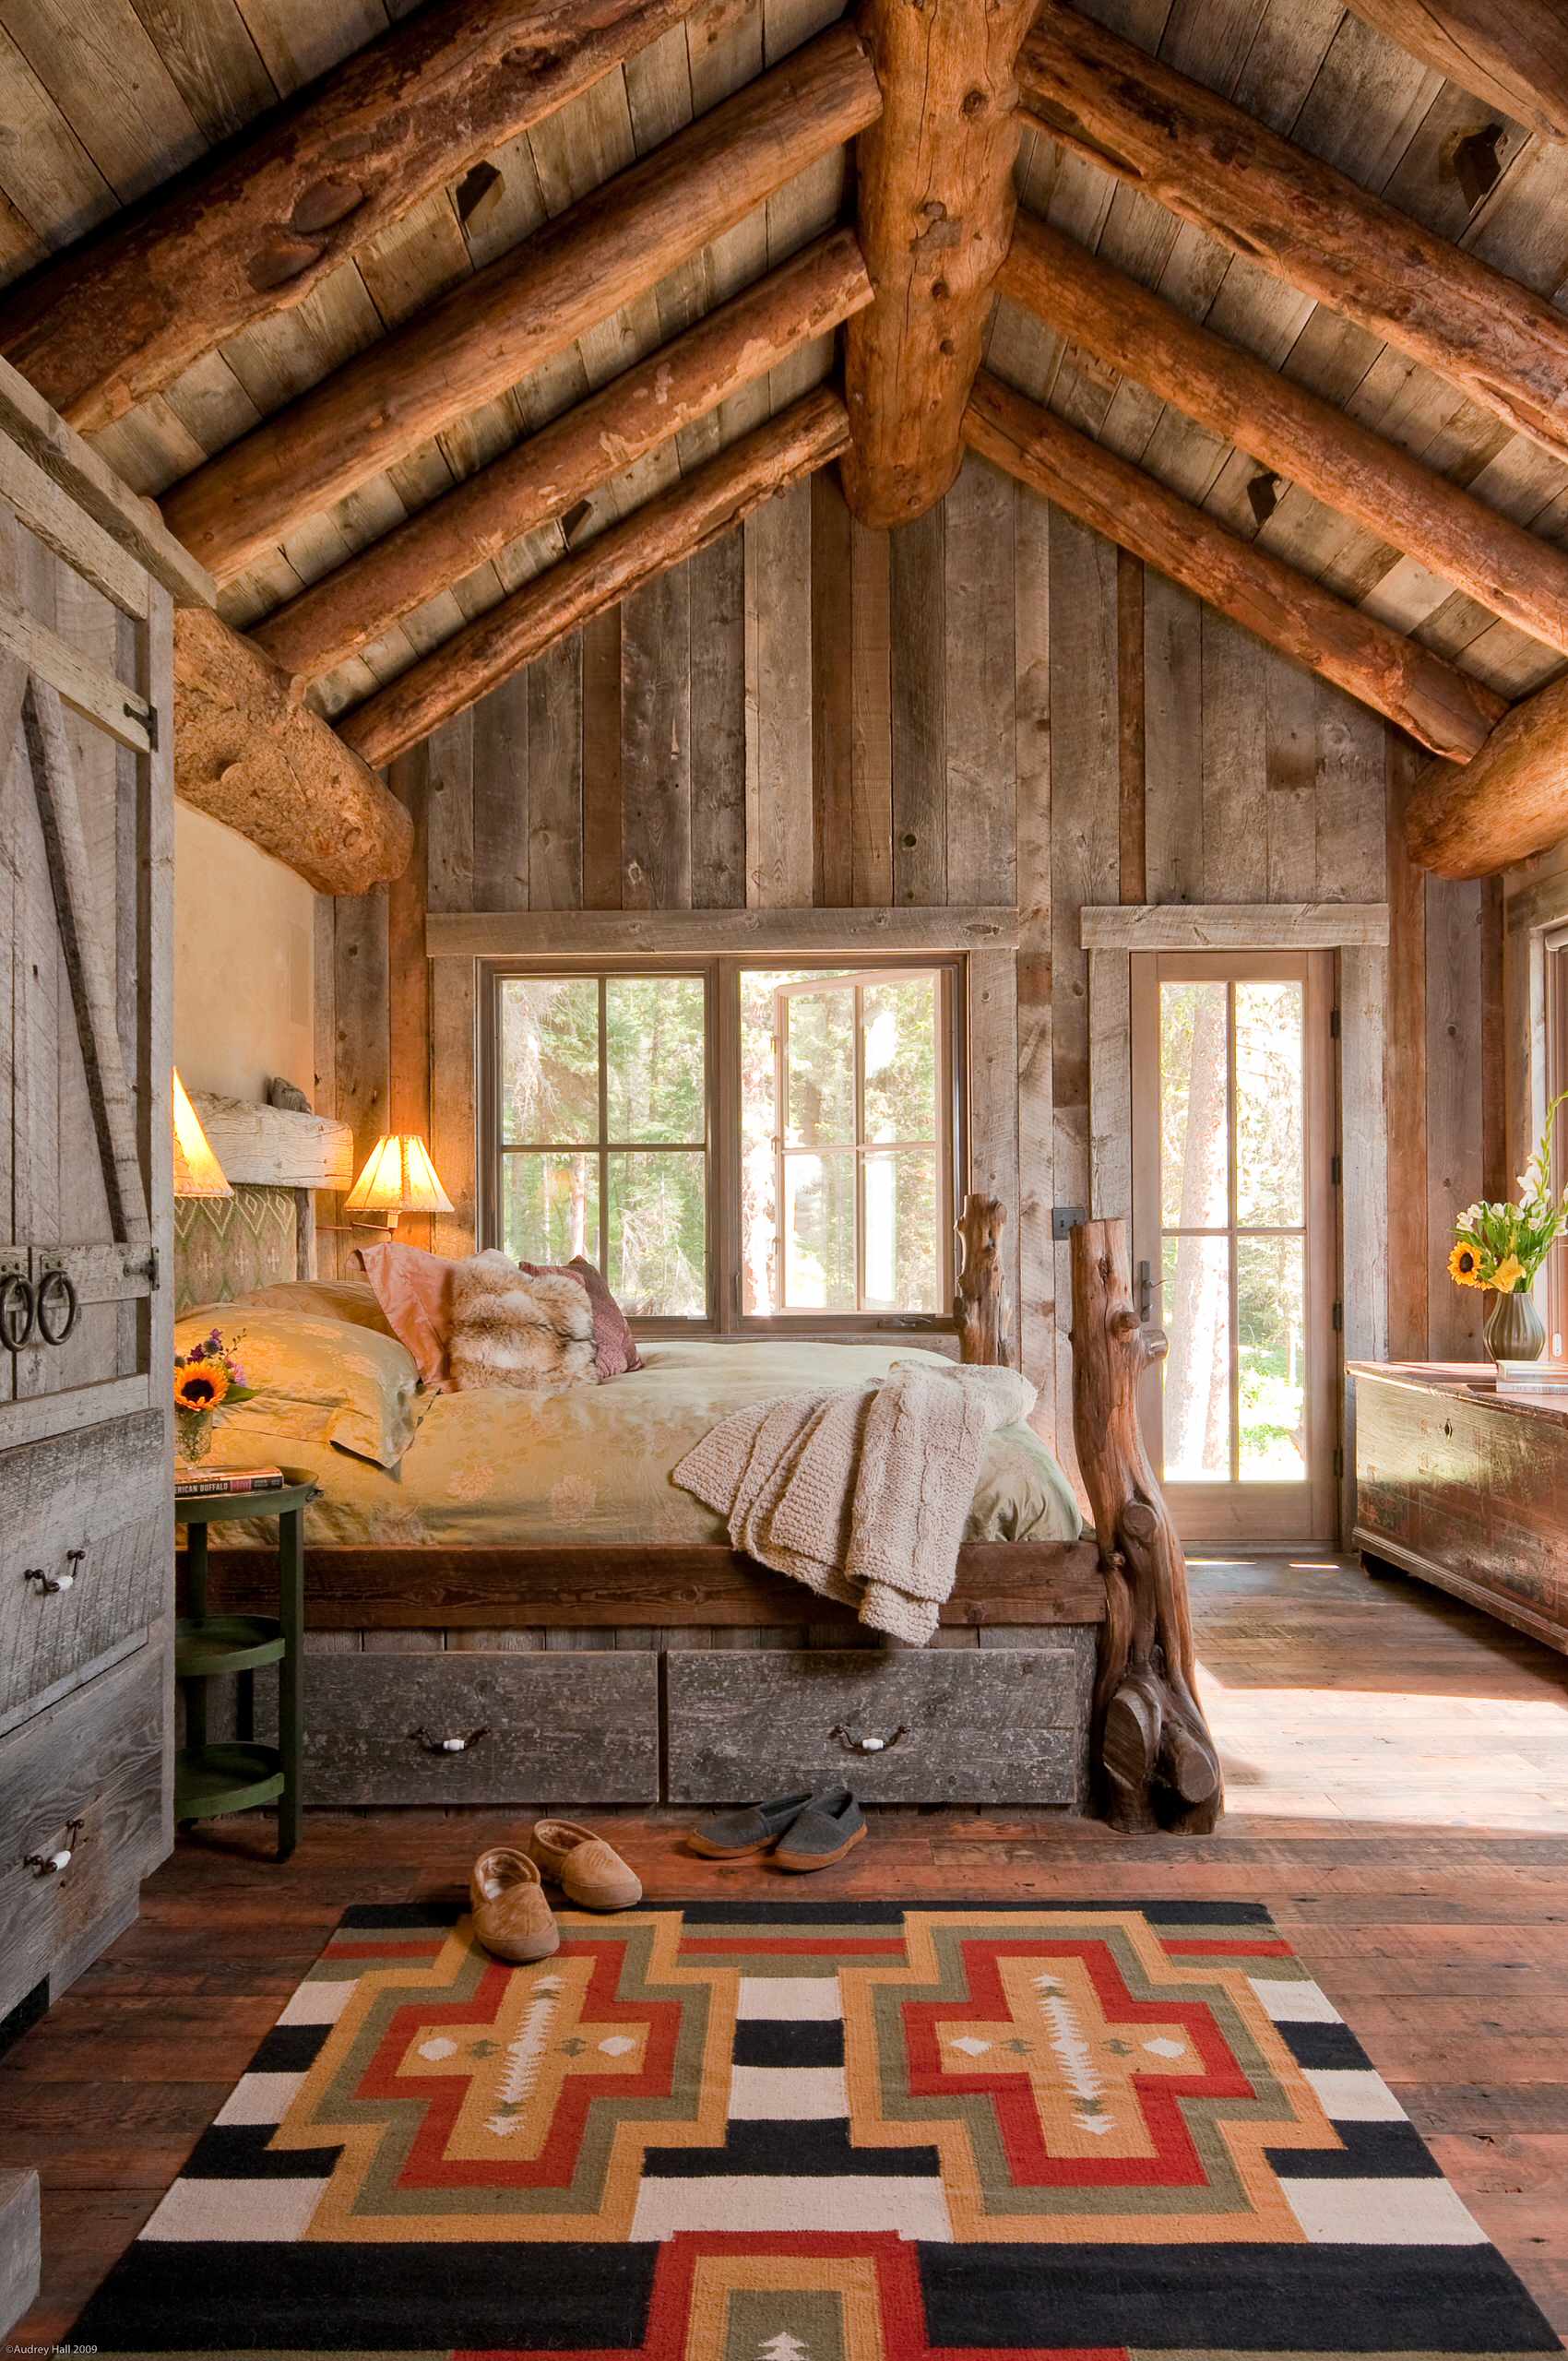 Rustic Cabin Interior - Photos & Ideas